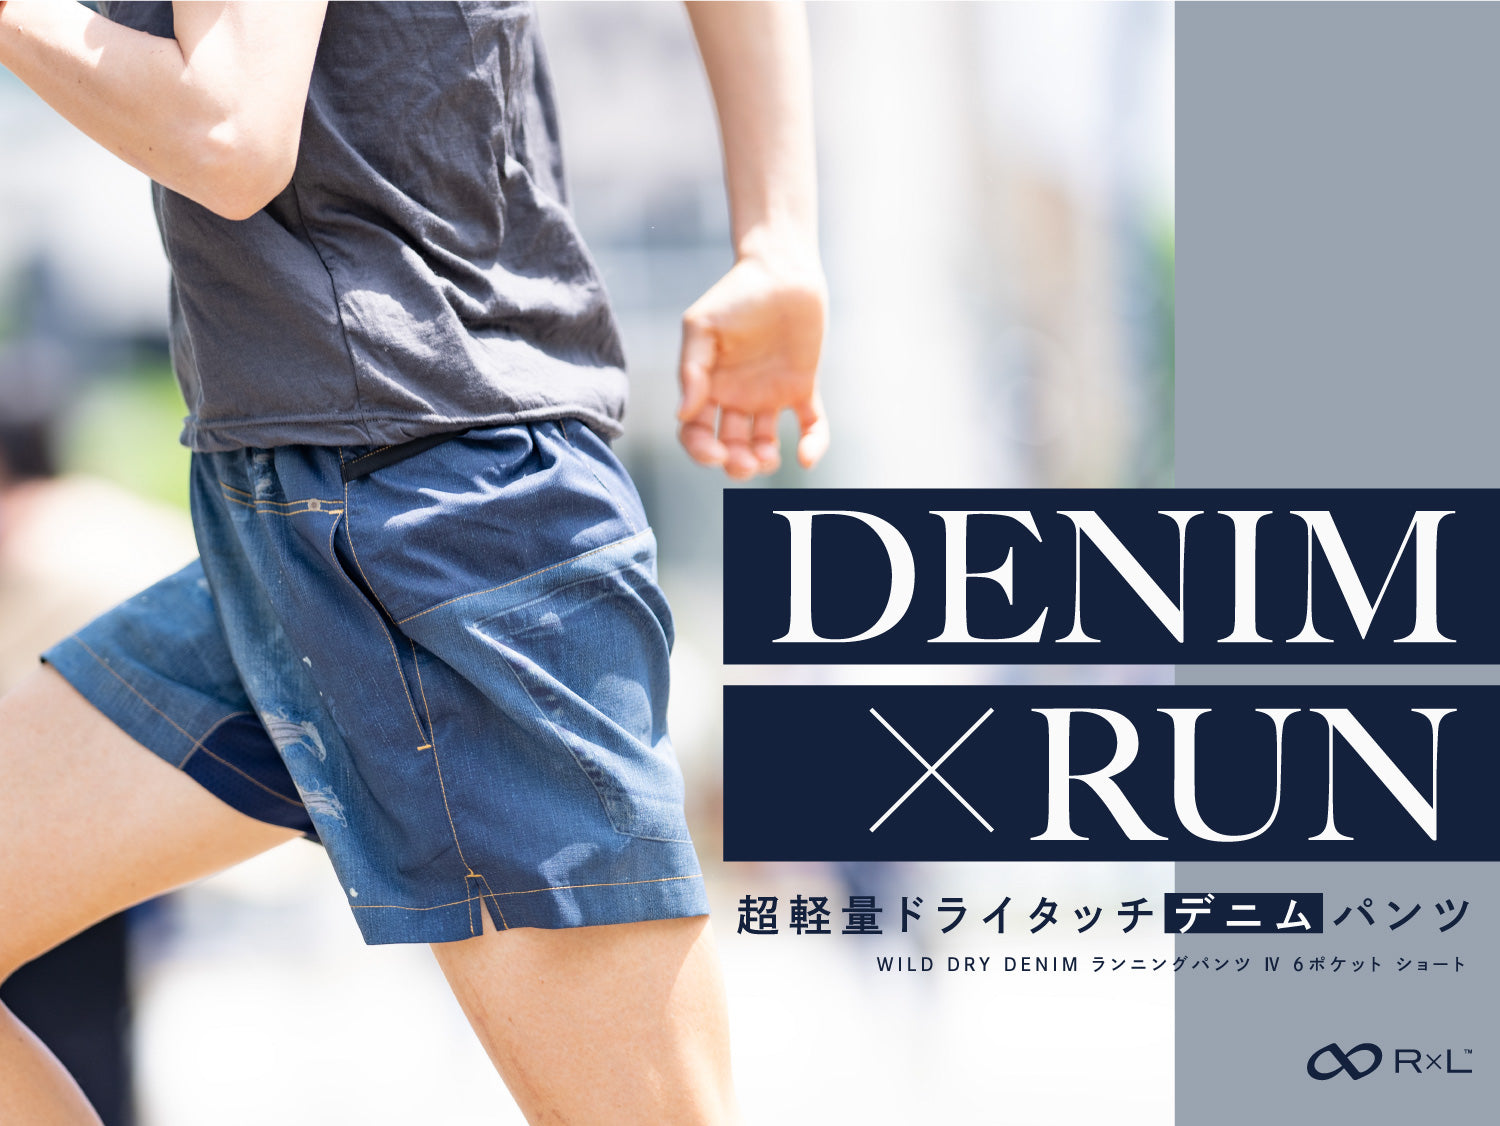 WILD DRY DENIM 6ポケットパンツ | R×L(アールエル) 公式 Online ショップ